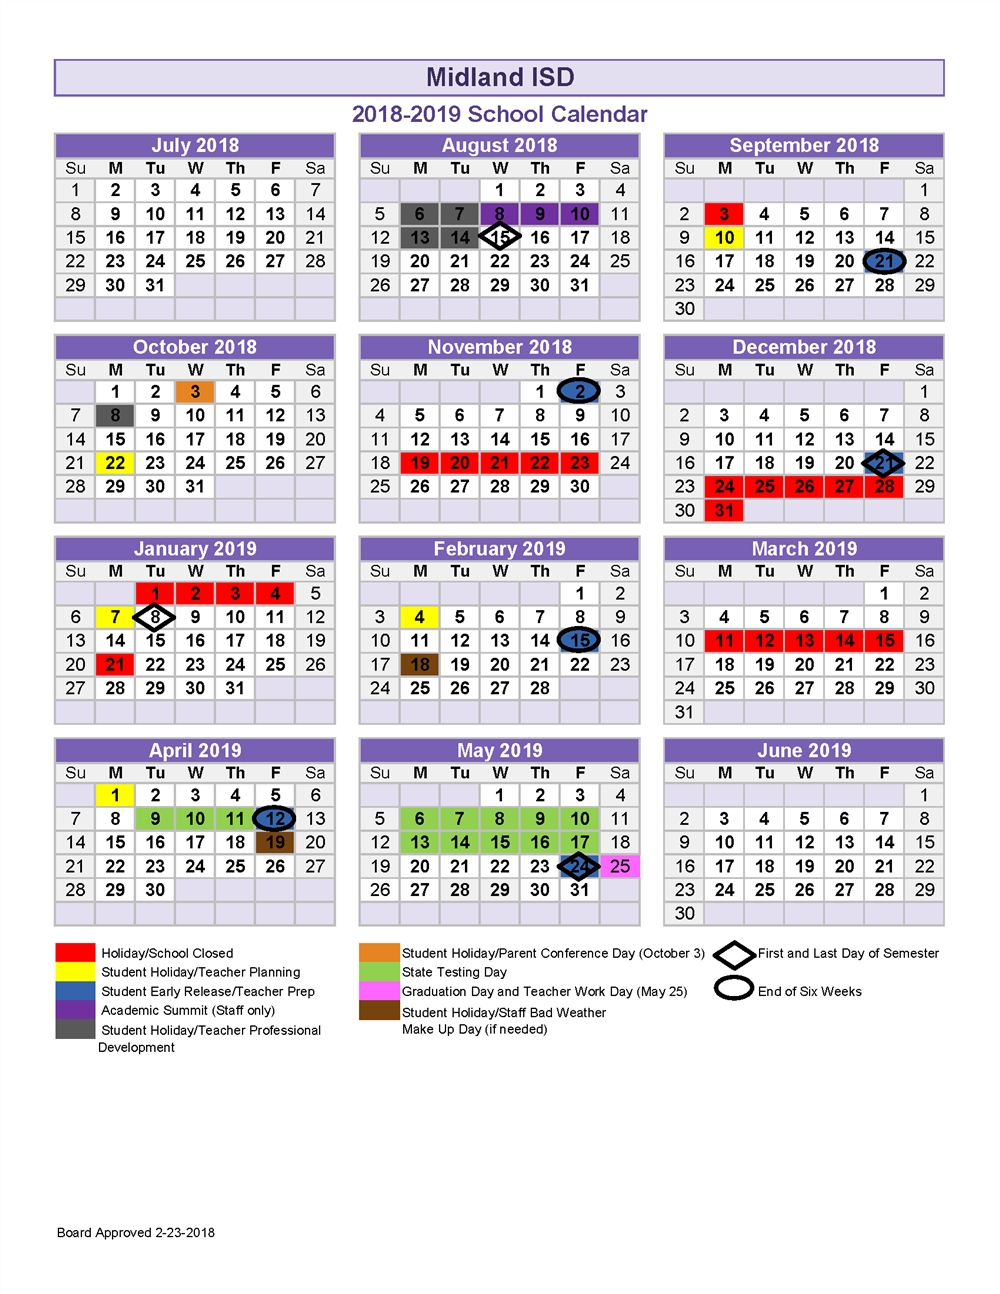 Lee County Schools Calendar Qualads